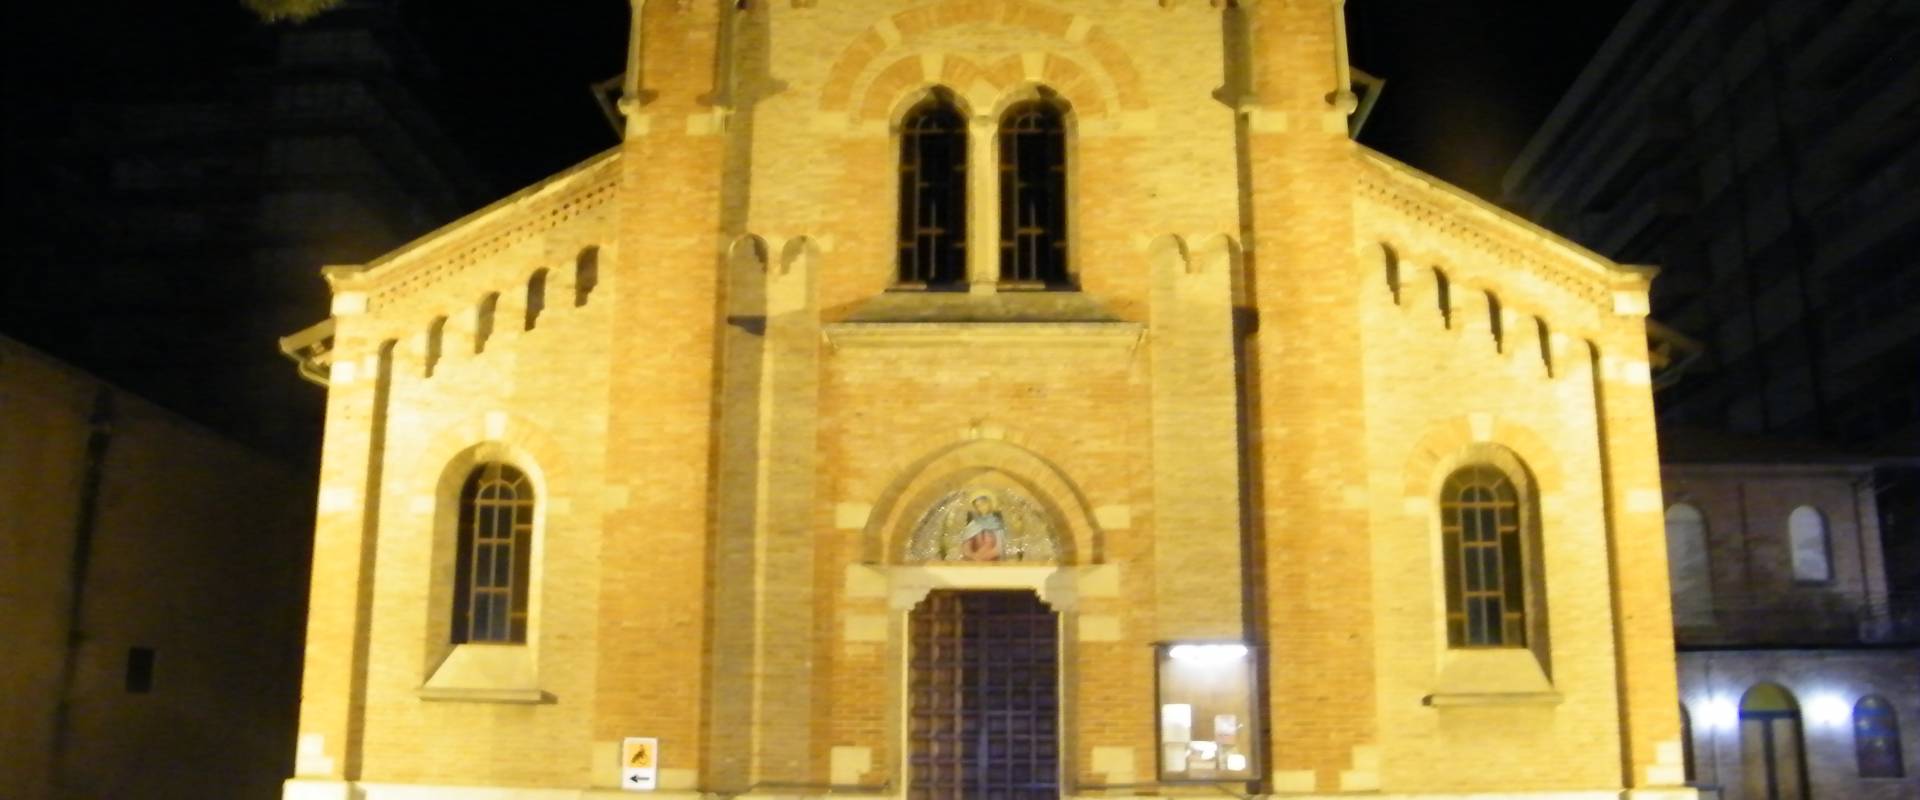 Chiesa di S. Maria Mater Admirabilis foto di Lukasz pob